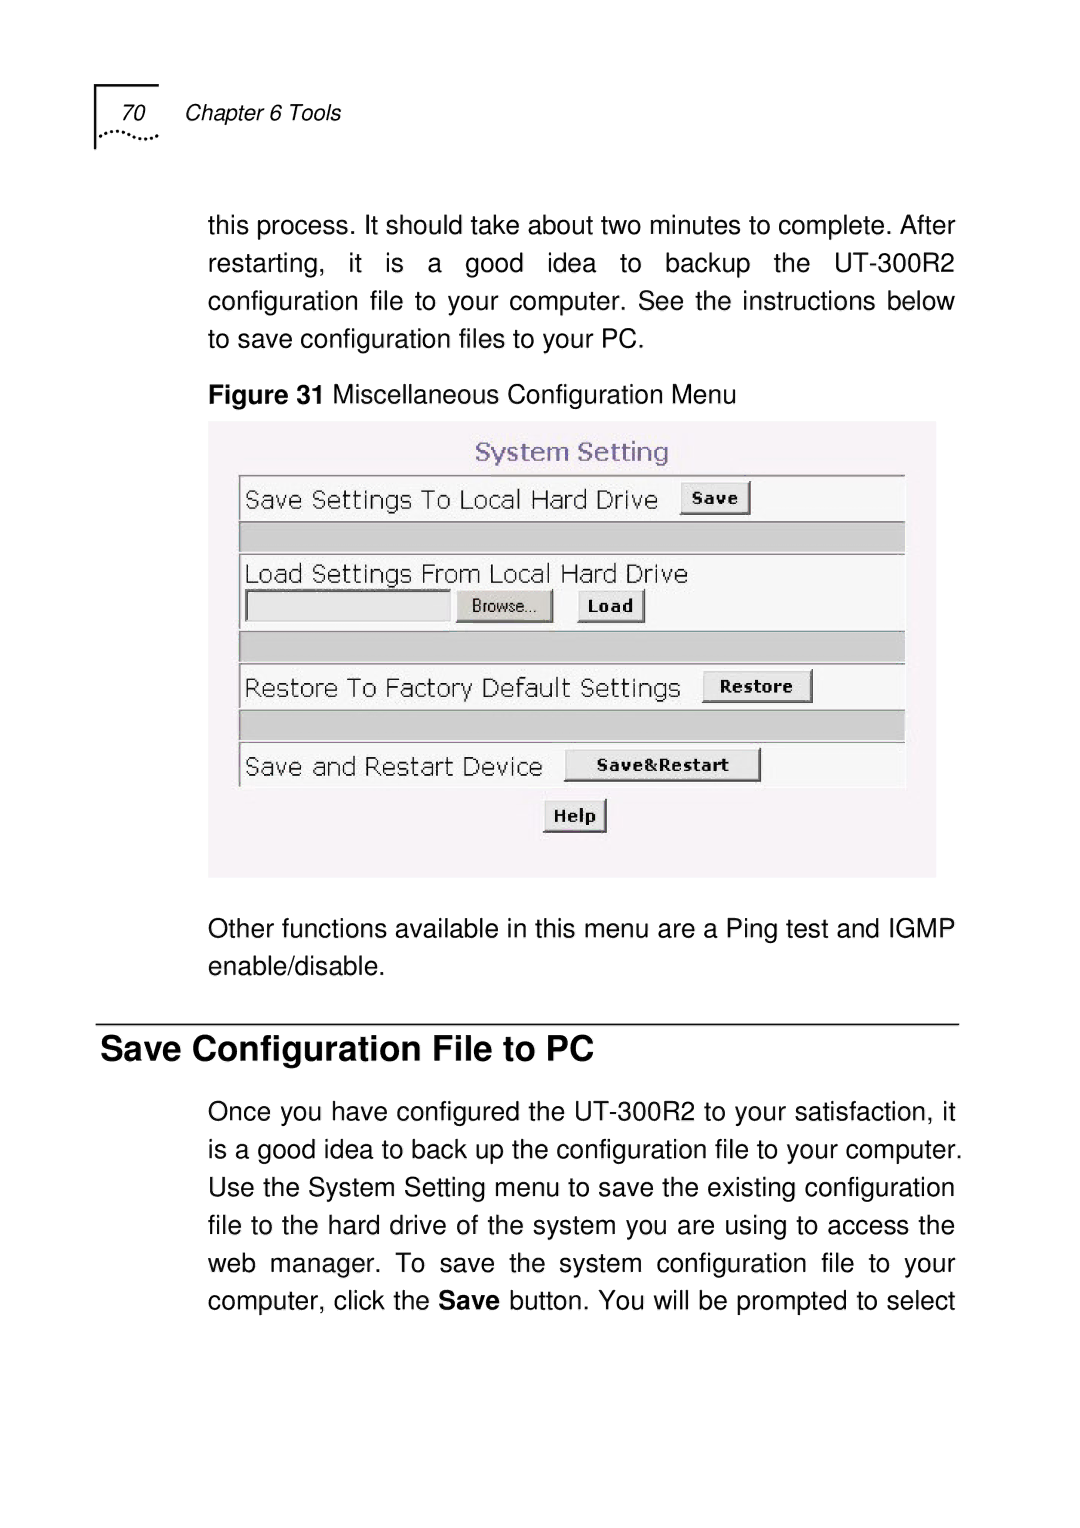 UTStarcom UT-300R2 manual Save Configuration File to PC 